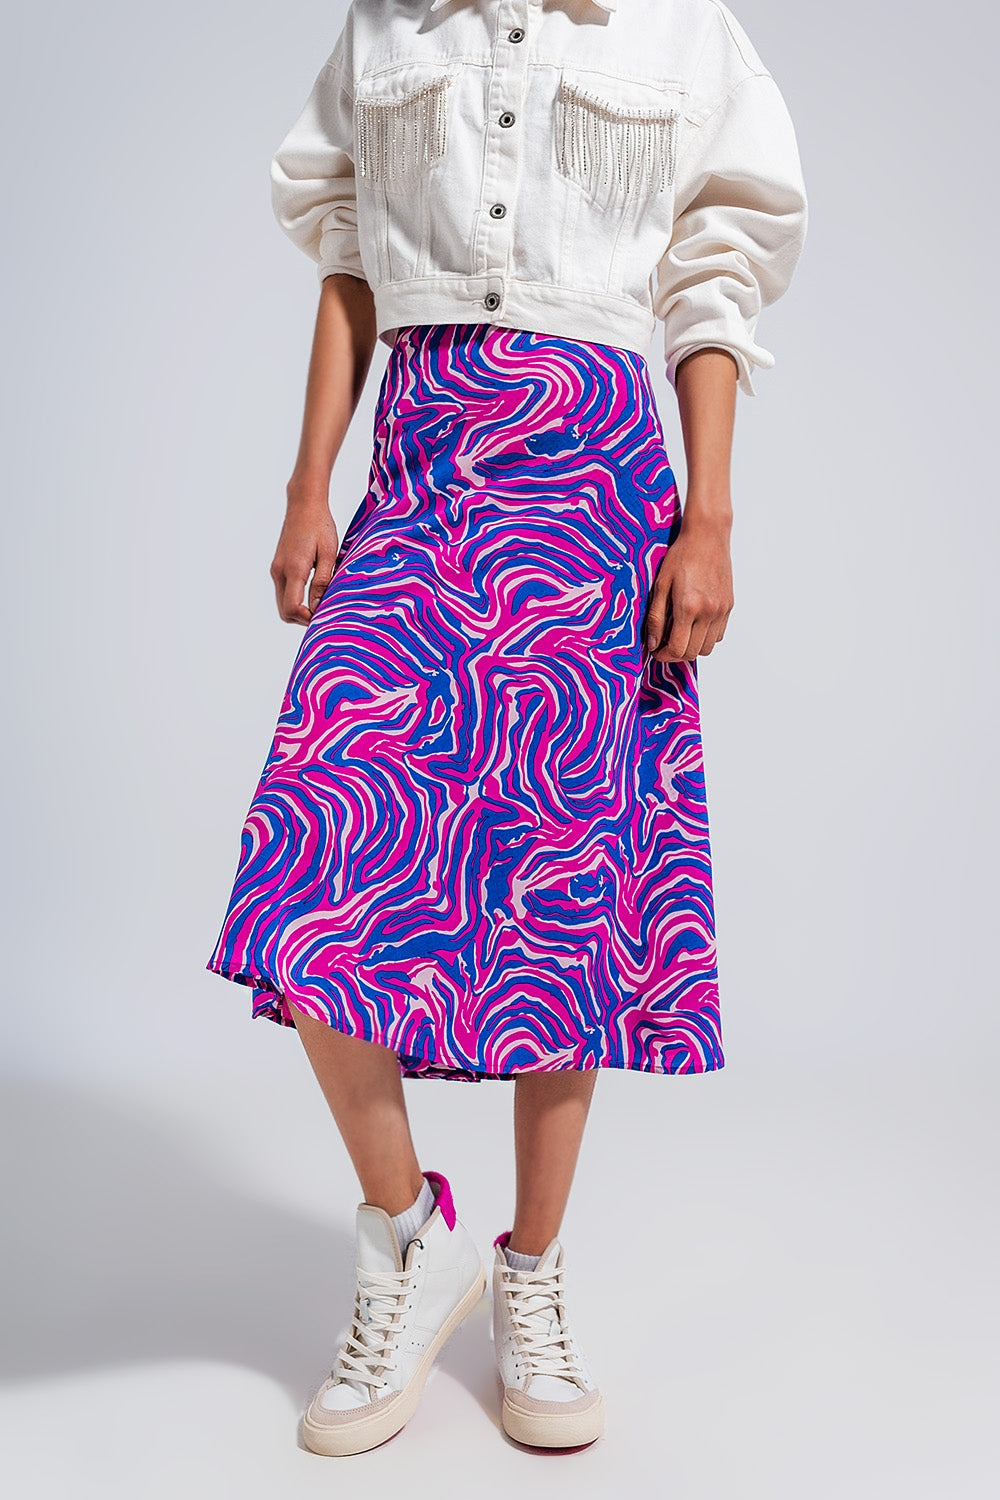 Midi skirt in abstract print in purple Szua Store